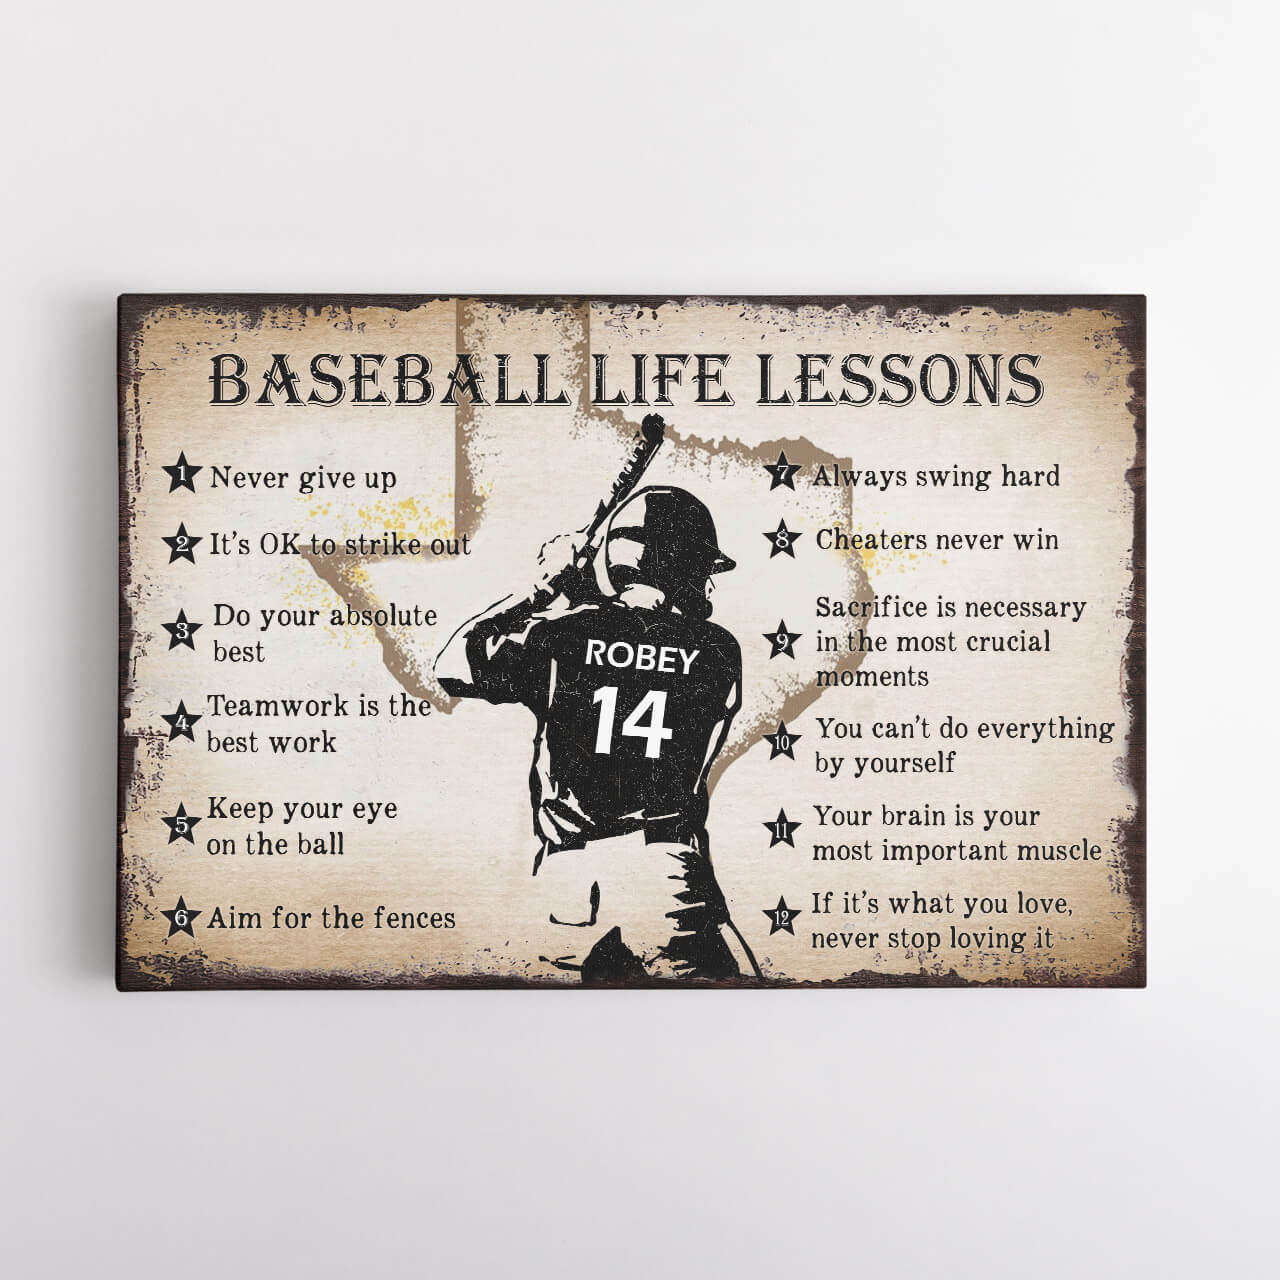 Baseball Life Lessons Canvas for Son, Custom Baseball Lesson Message Canvas for Grandson, Baseball Life Lessons Canvas for Fans